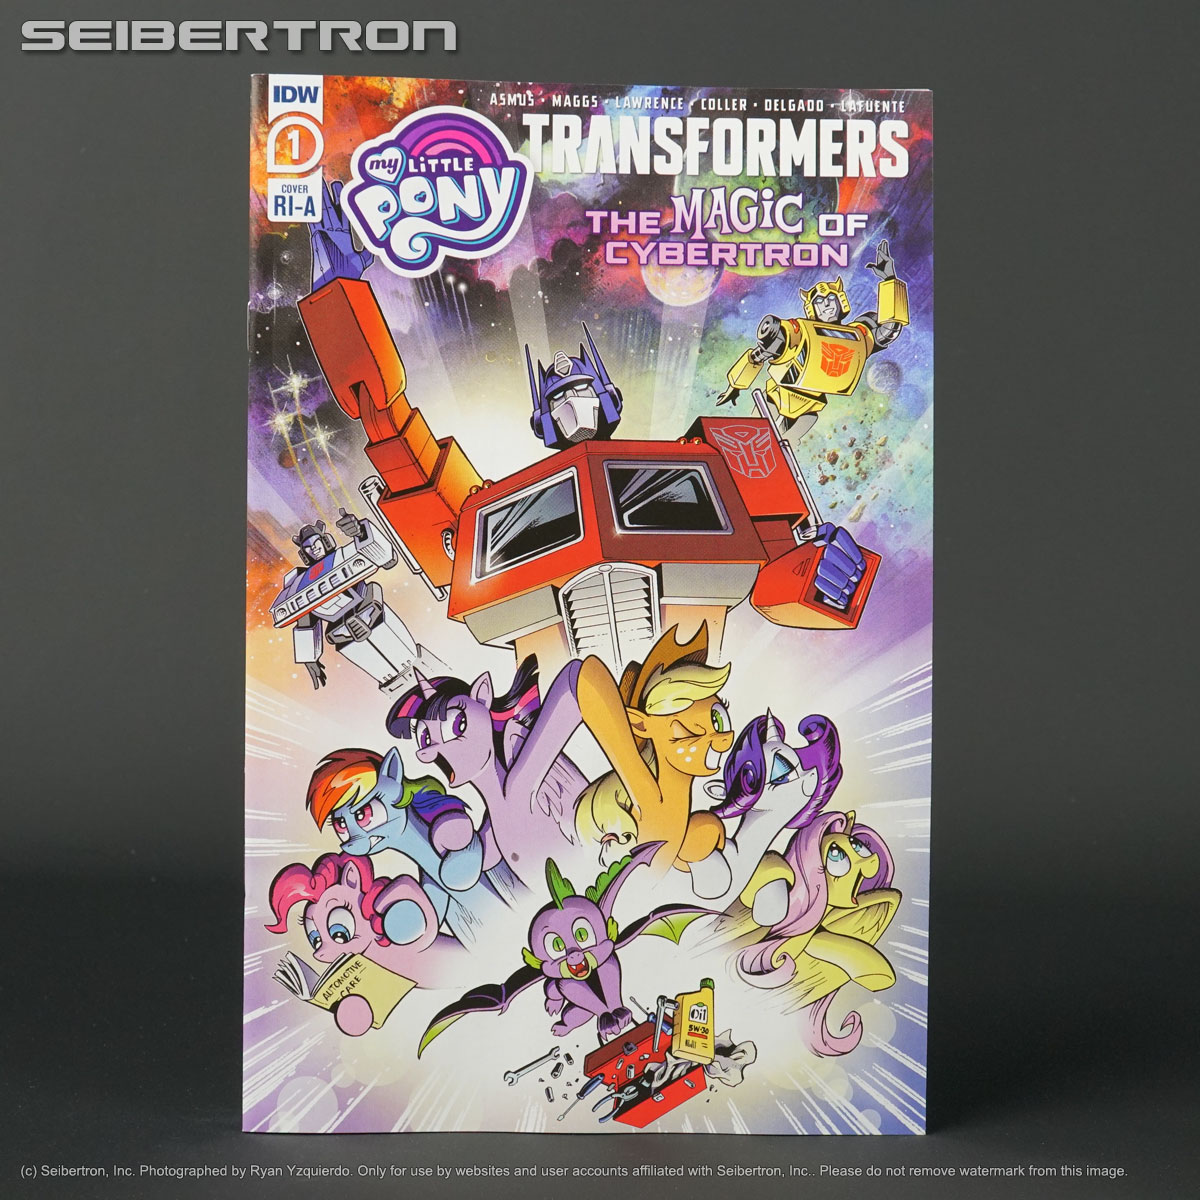 Transformers My Little Pony MAGIC OF CYBERTRON #1 RI-A 1:10 IDW Comics 2021 1RIA